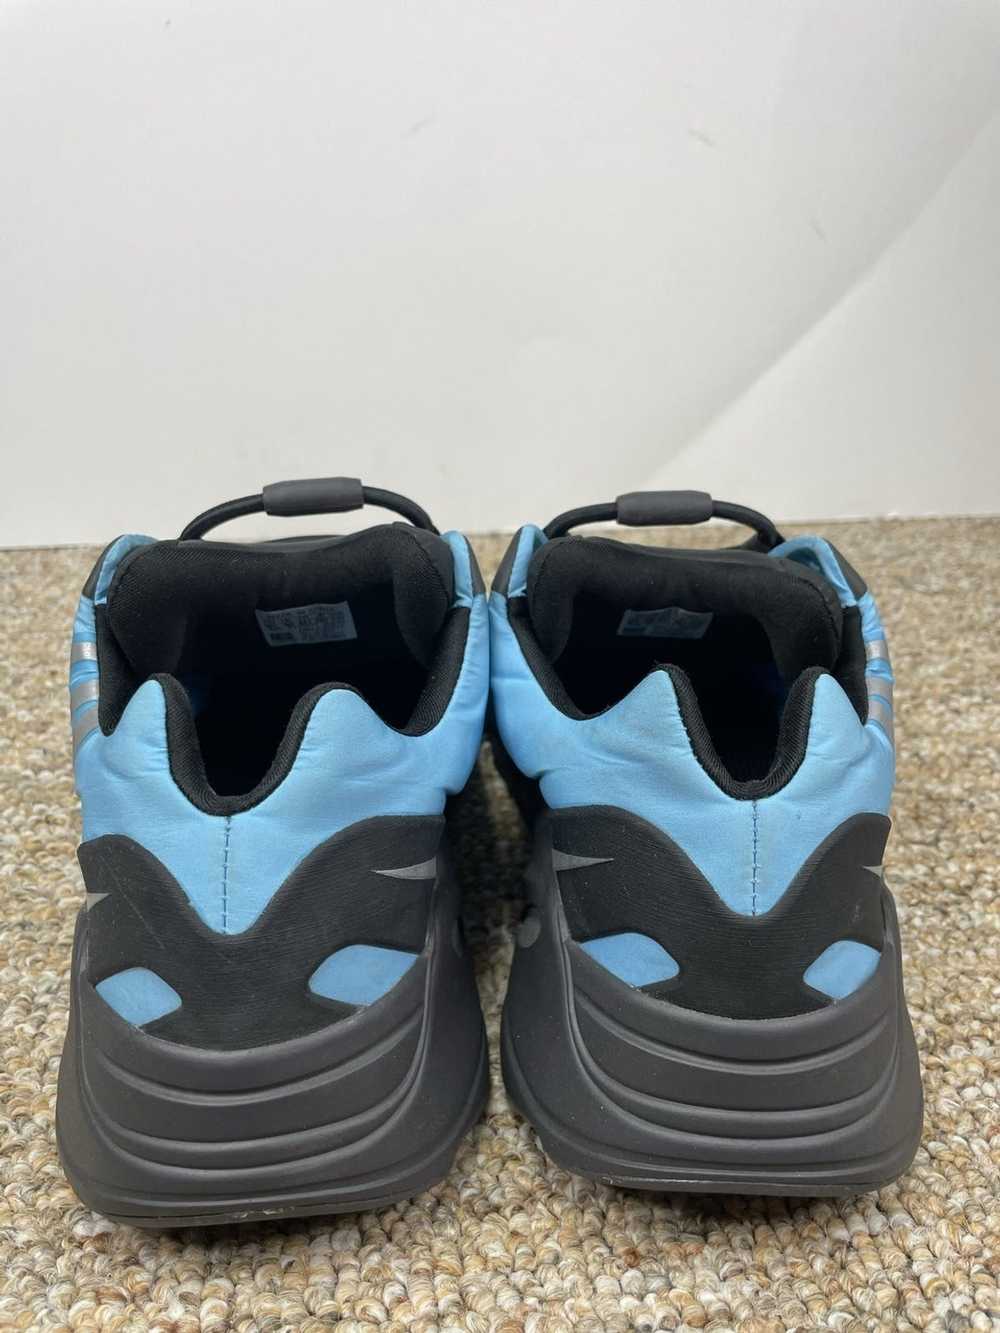 Adidas Yeezy Boost 700 Mnvn Bright Cyan - image 5